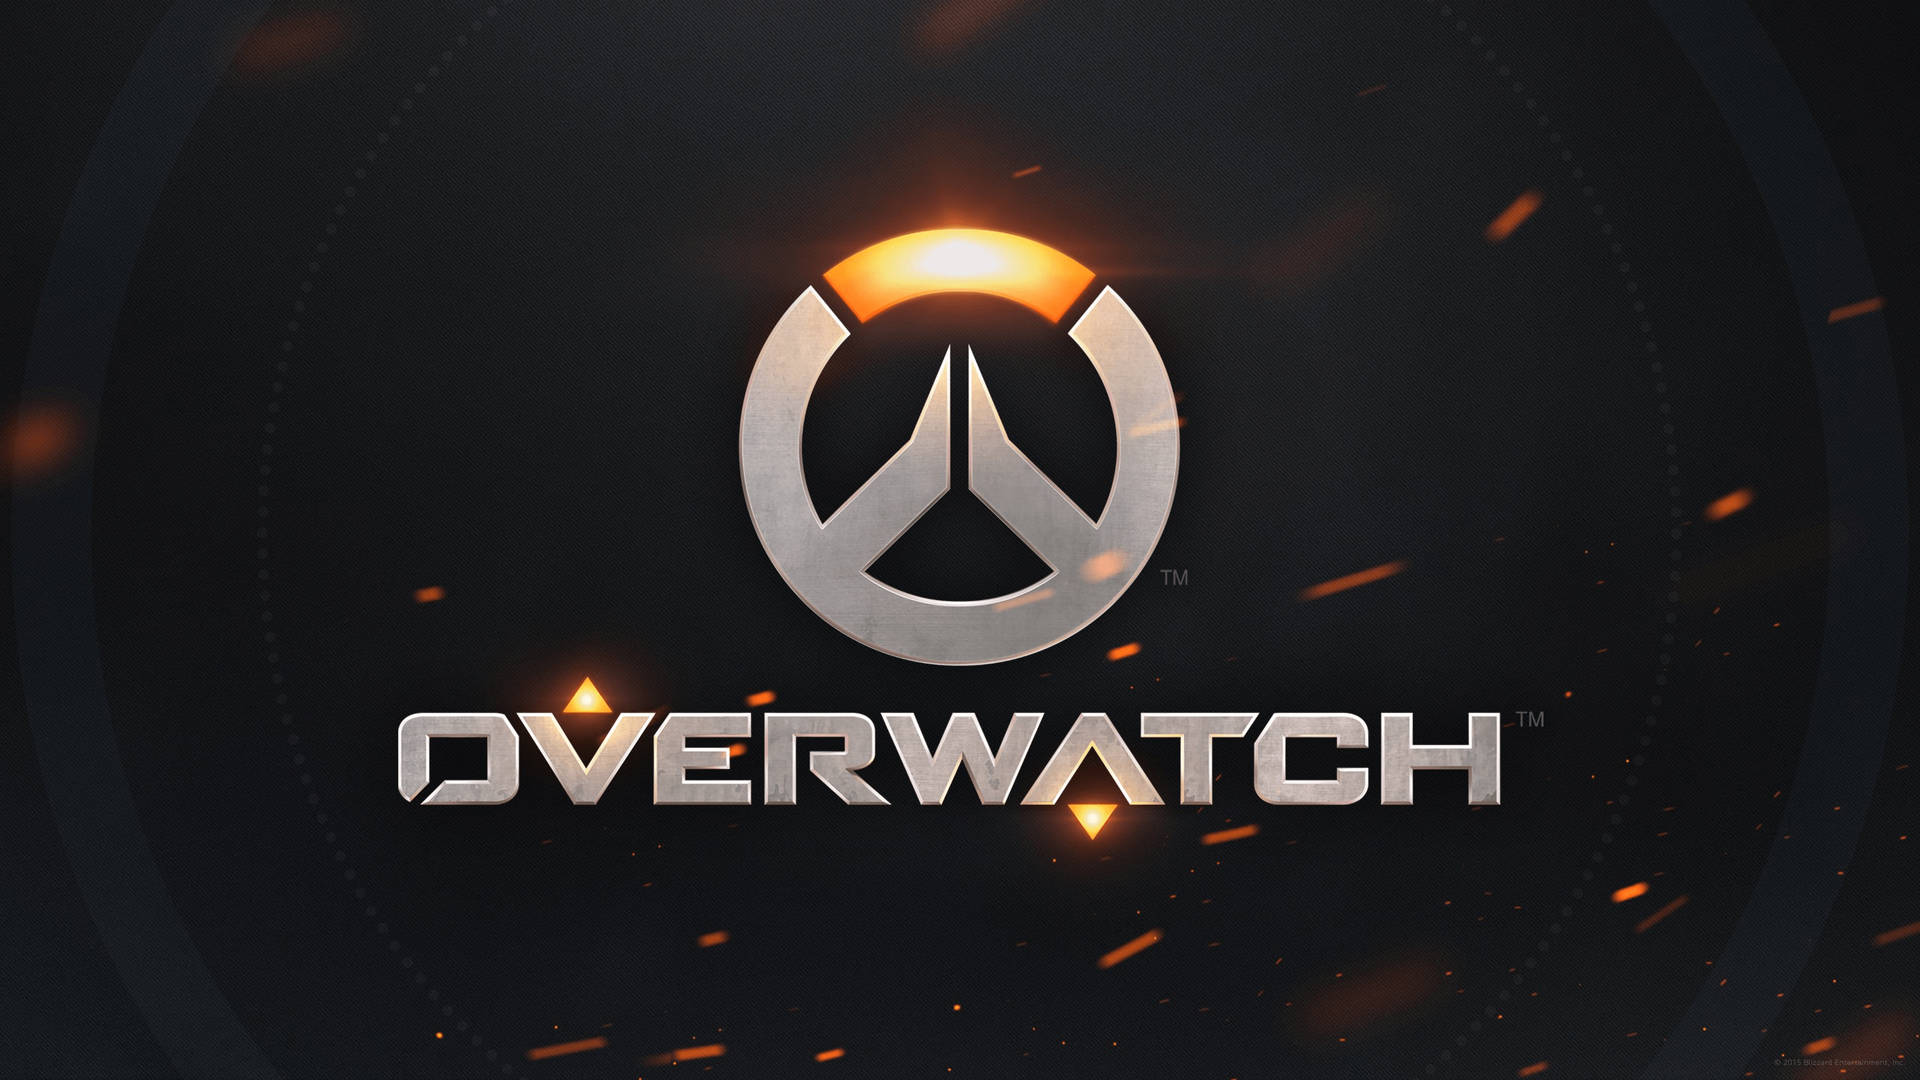 Overwatch Amazing Logo Design Wallpaper